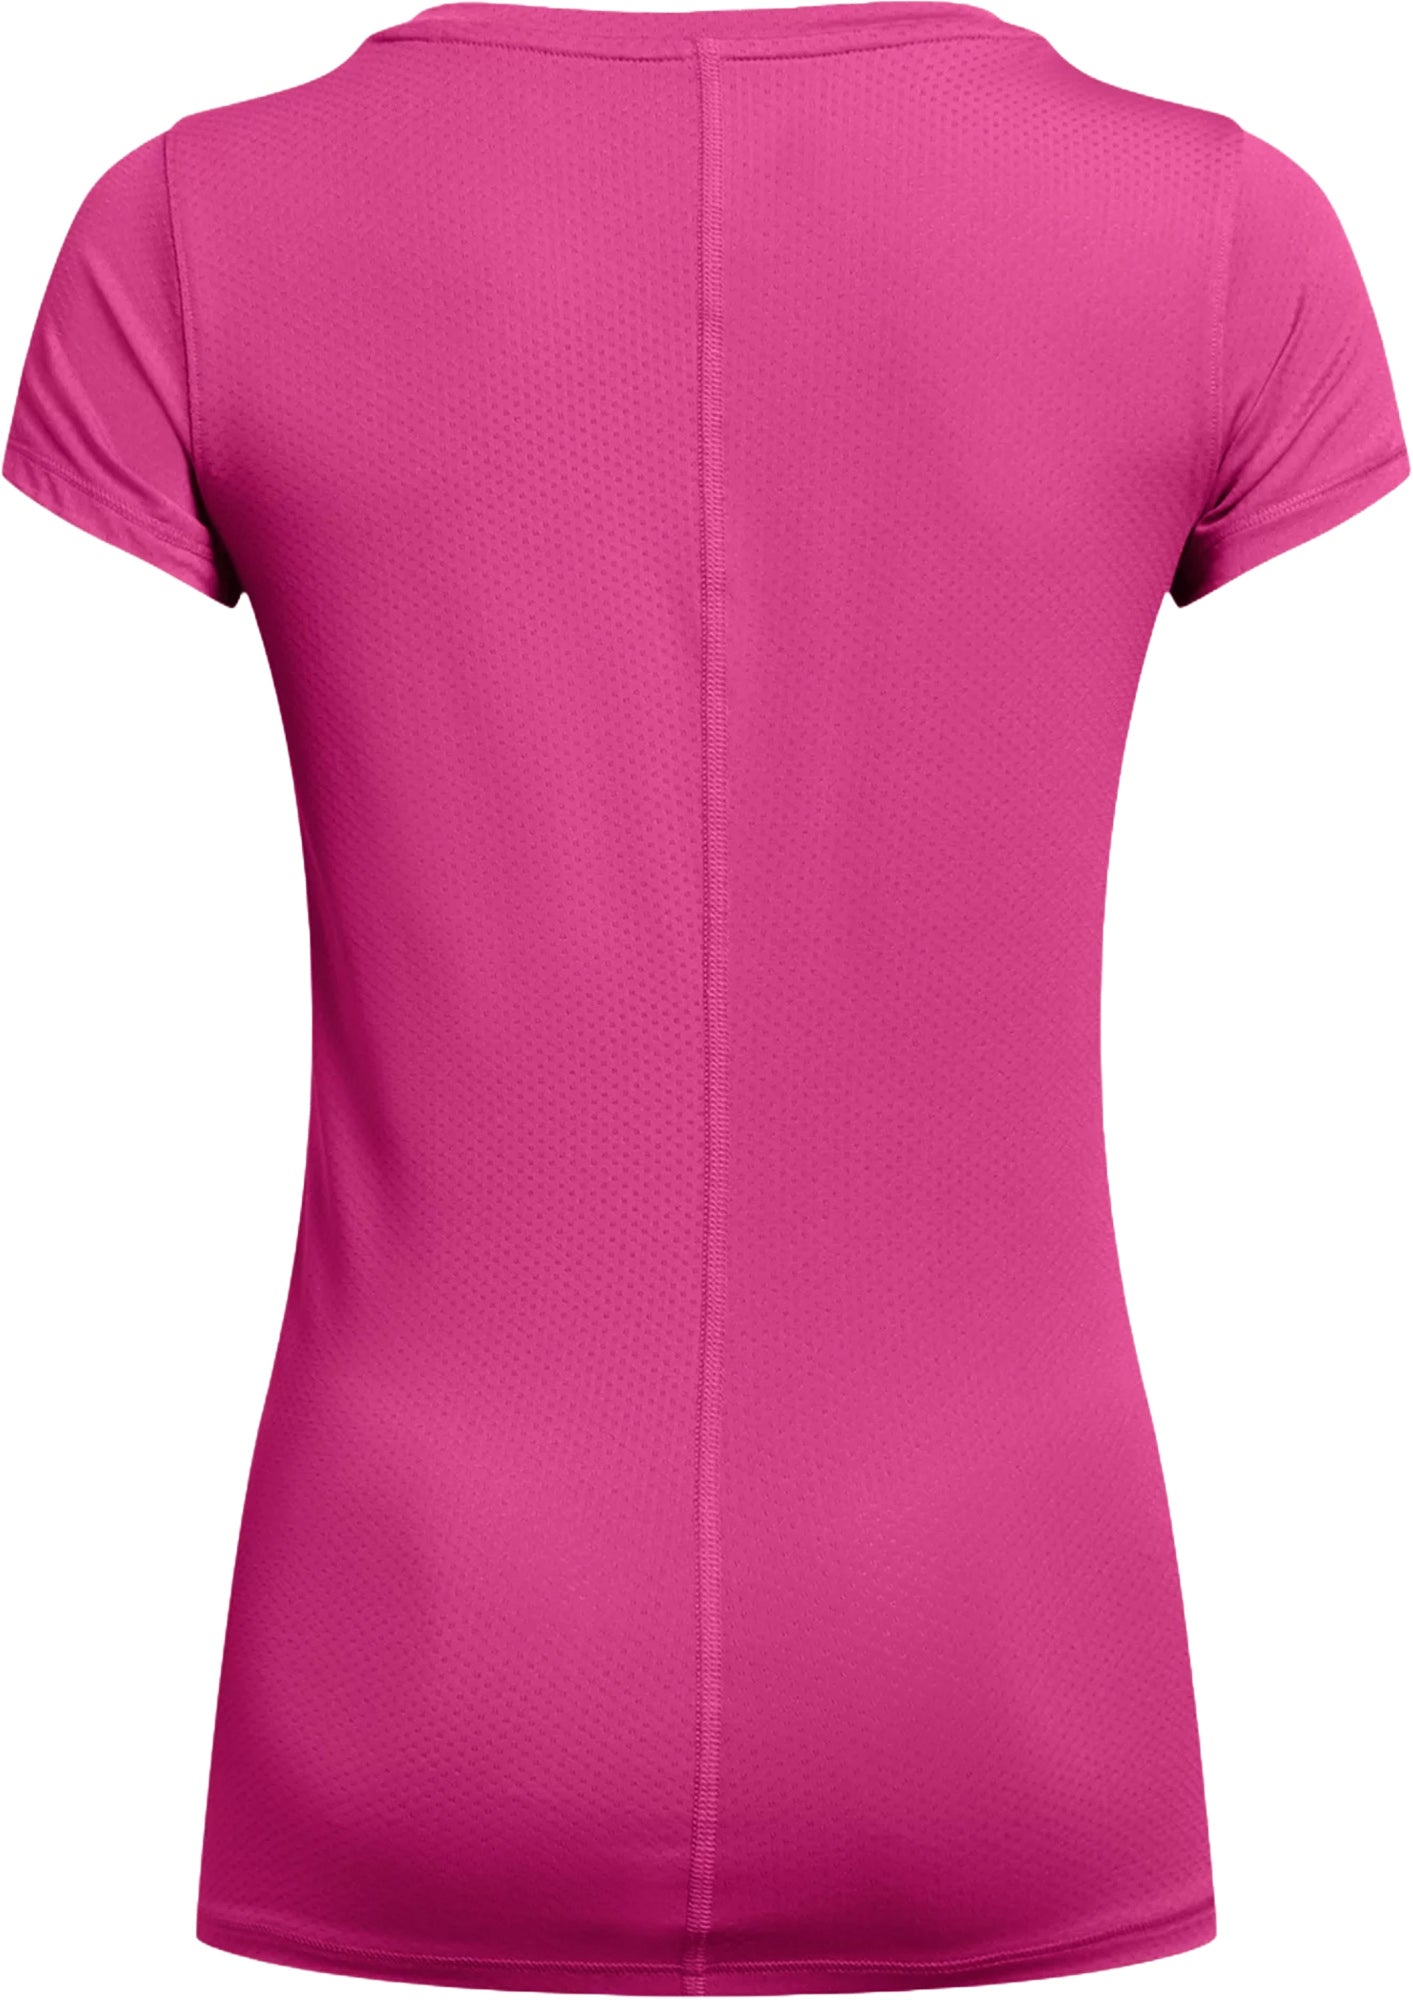 Under Armour Women's Armour Heatgear Bike Shorts, Pink, Size: XS